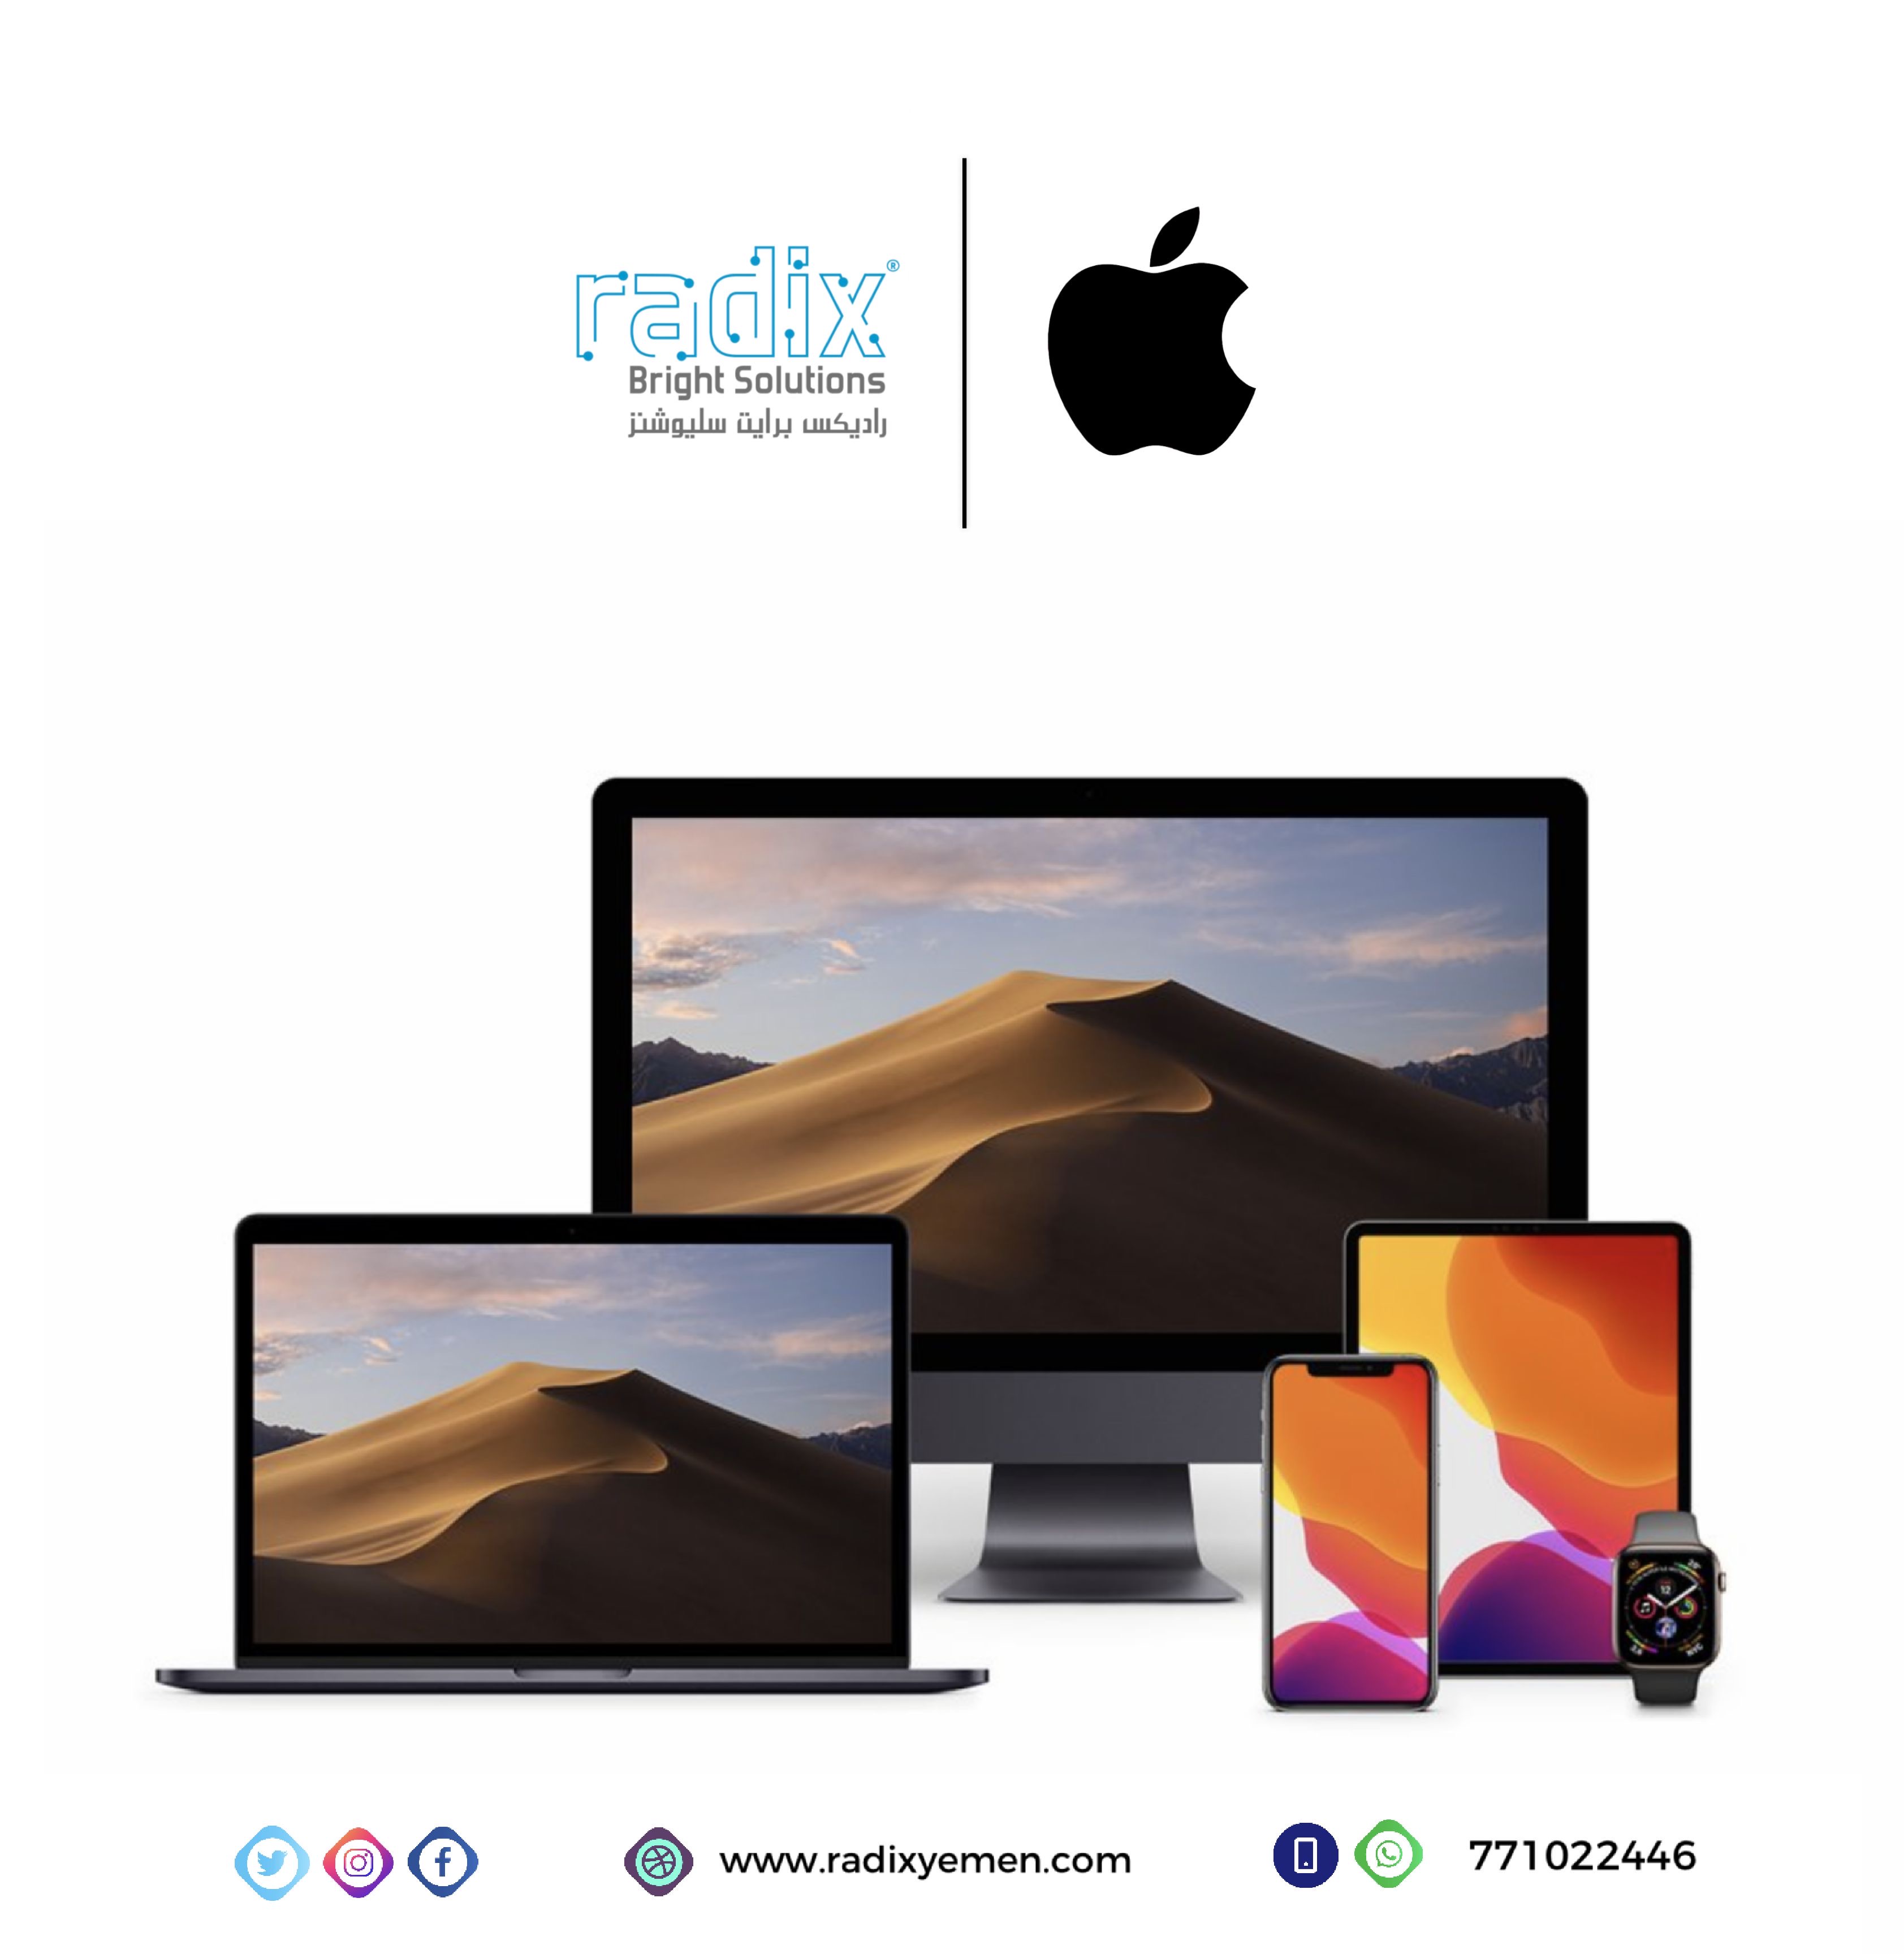 Apple Products in Yemen